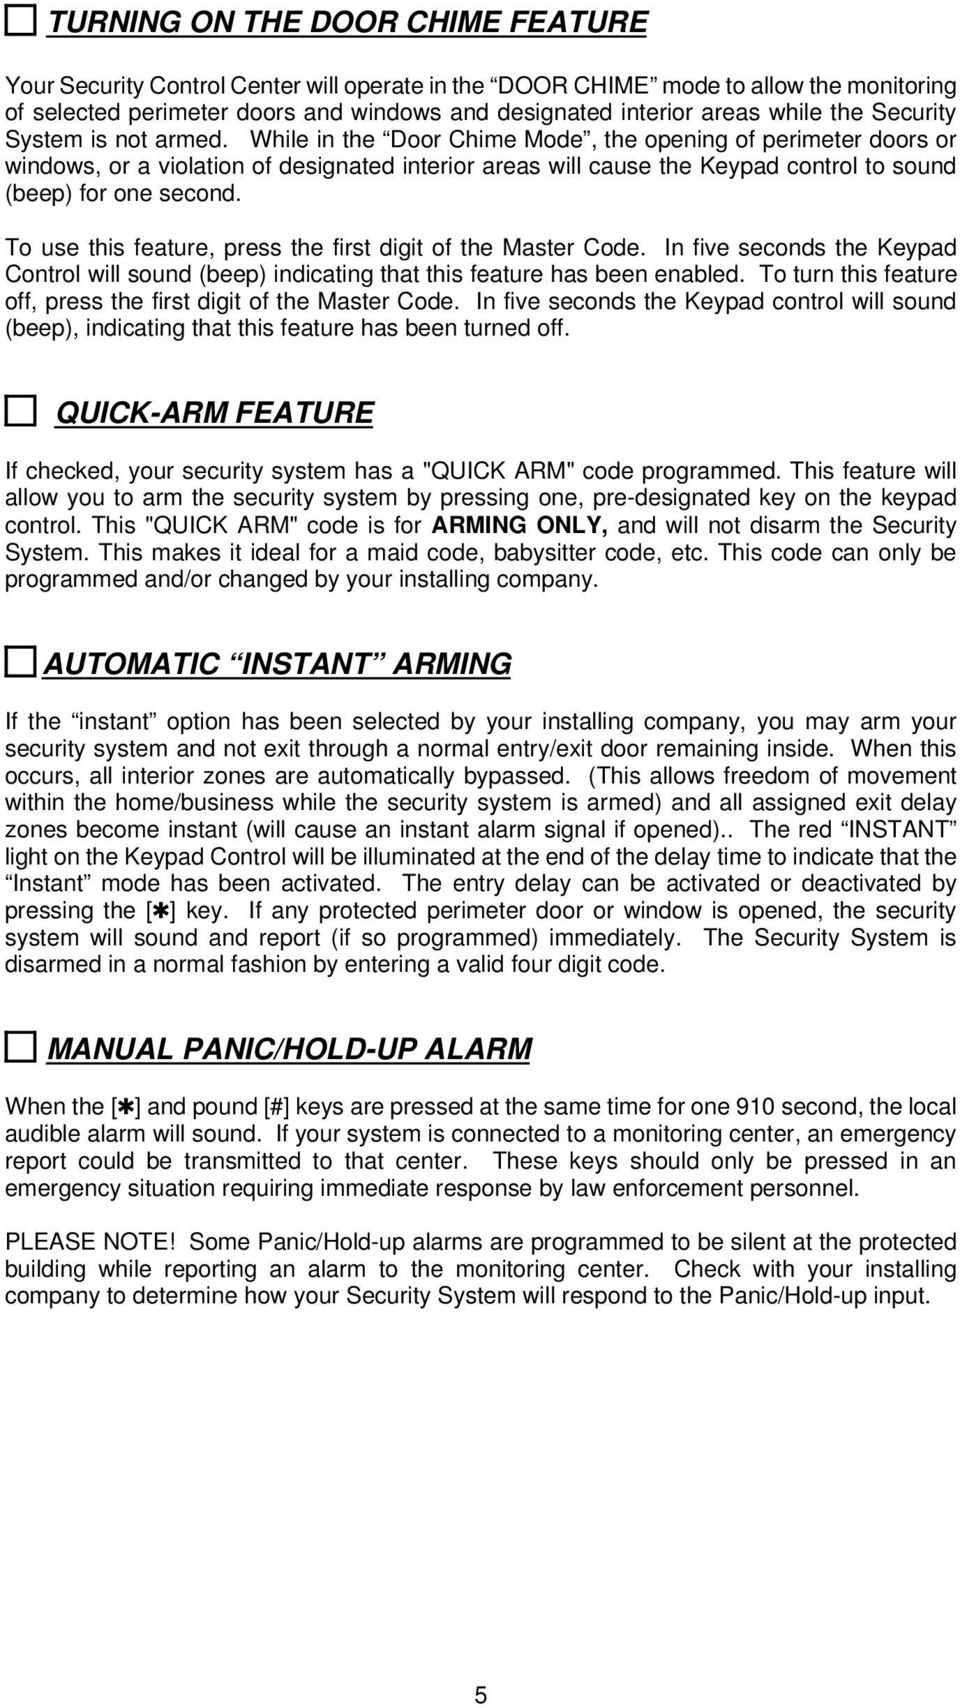 First Alert Professional Fa560 Manual